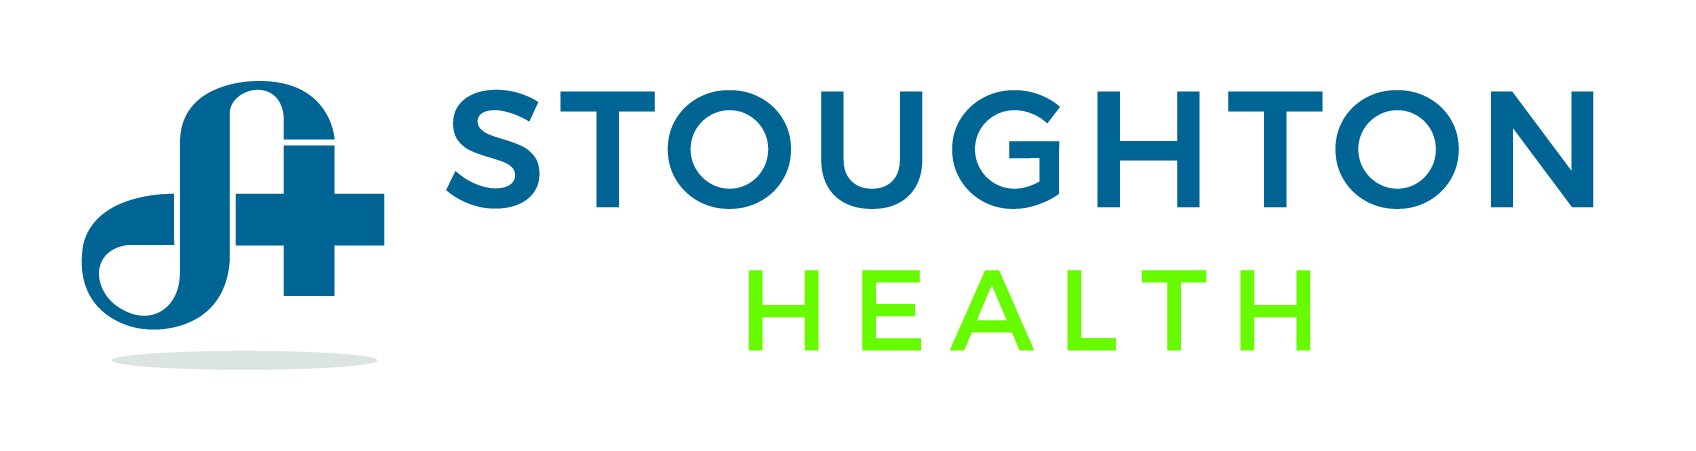 Stoughton Health logo CMYK.jpg